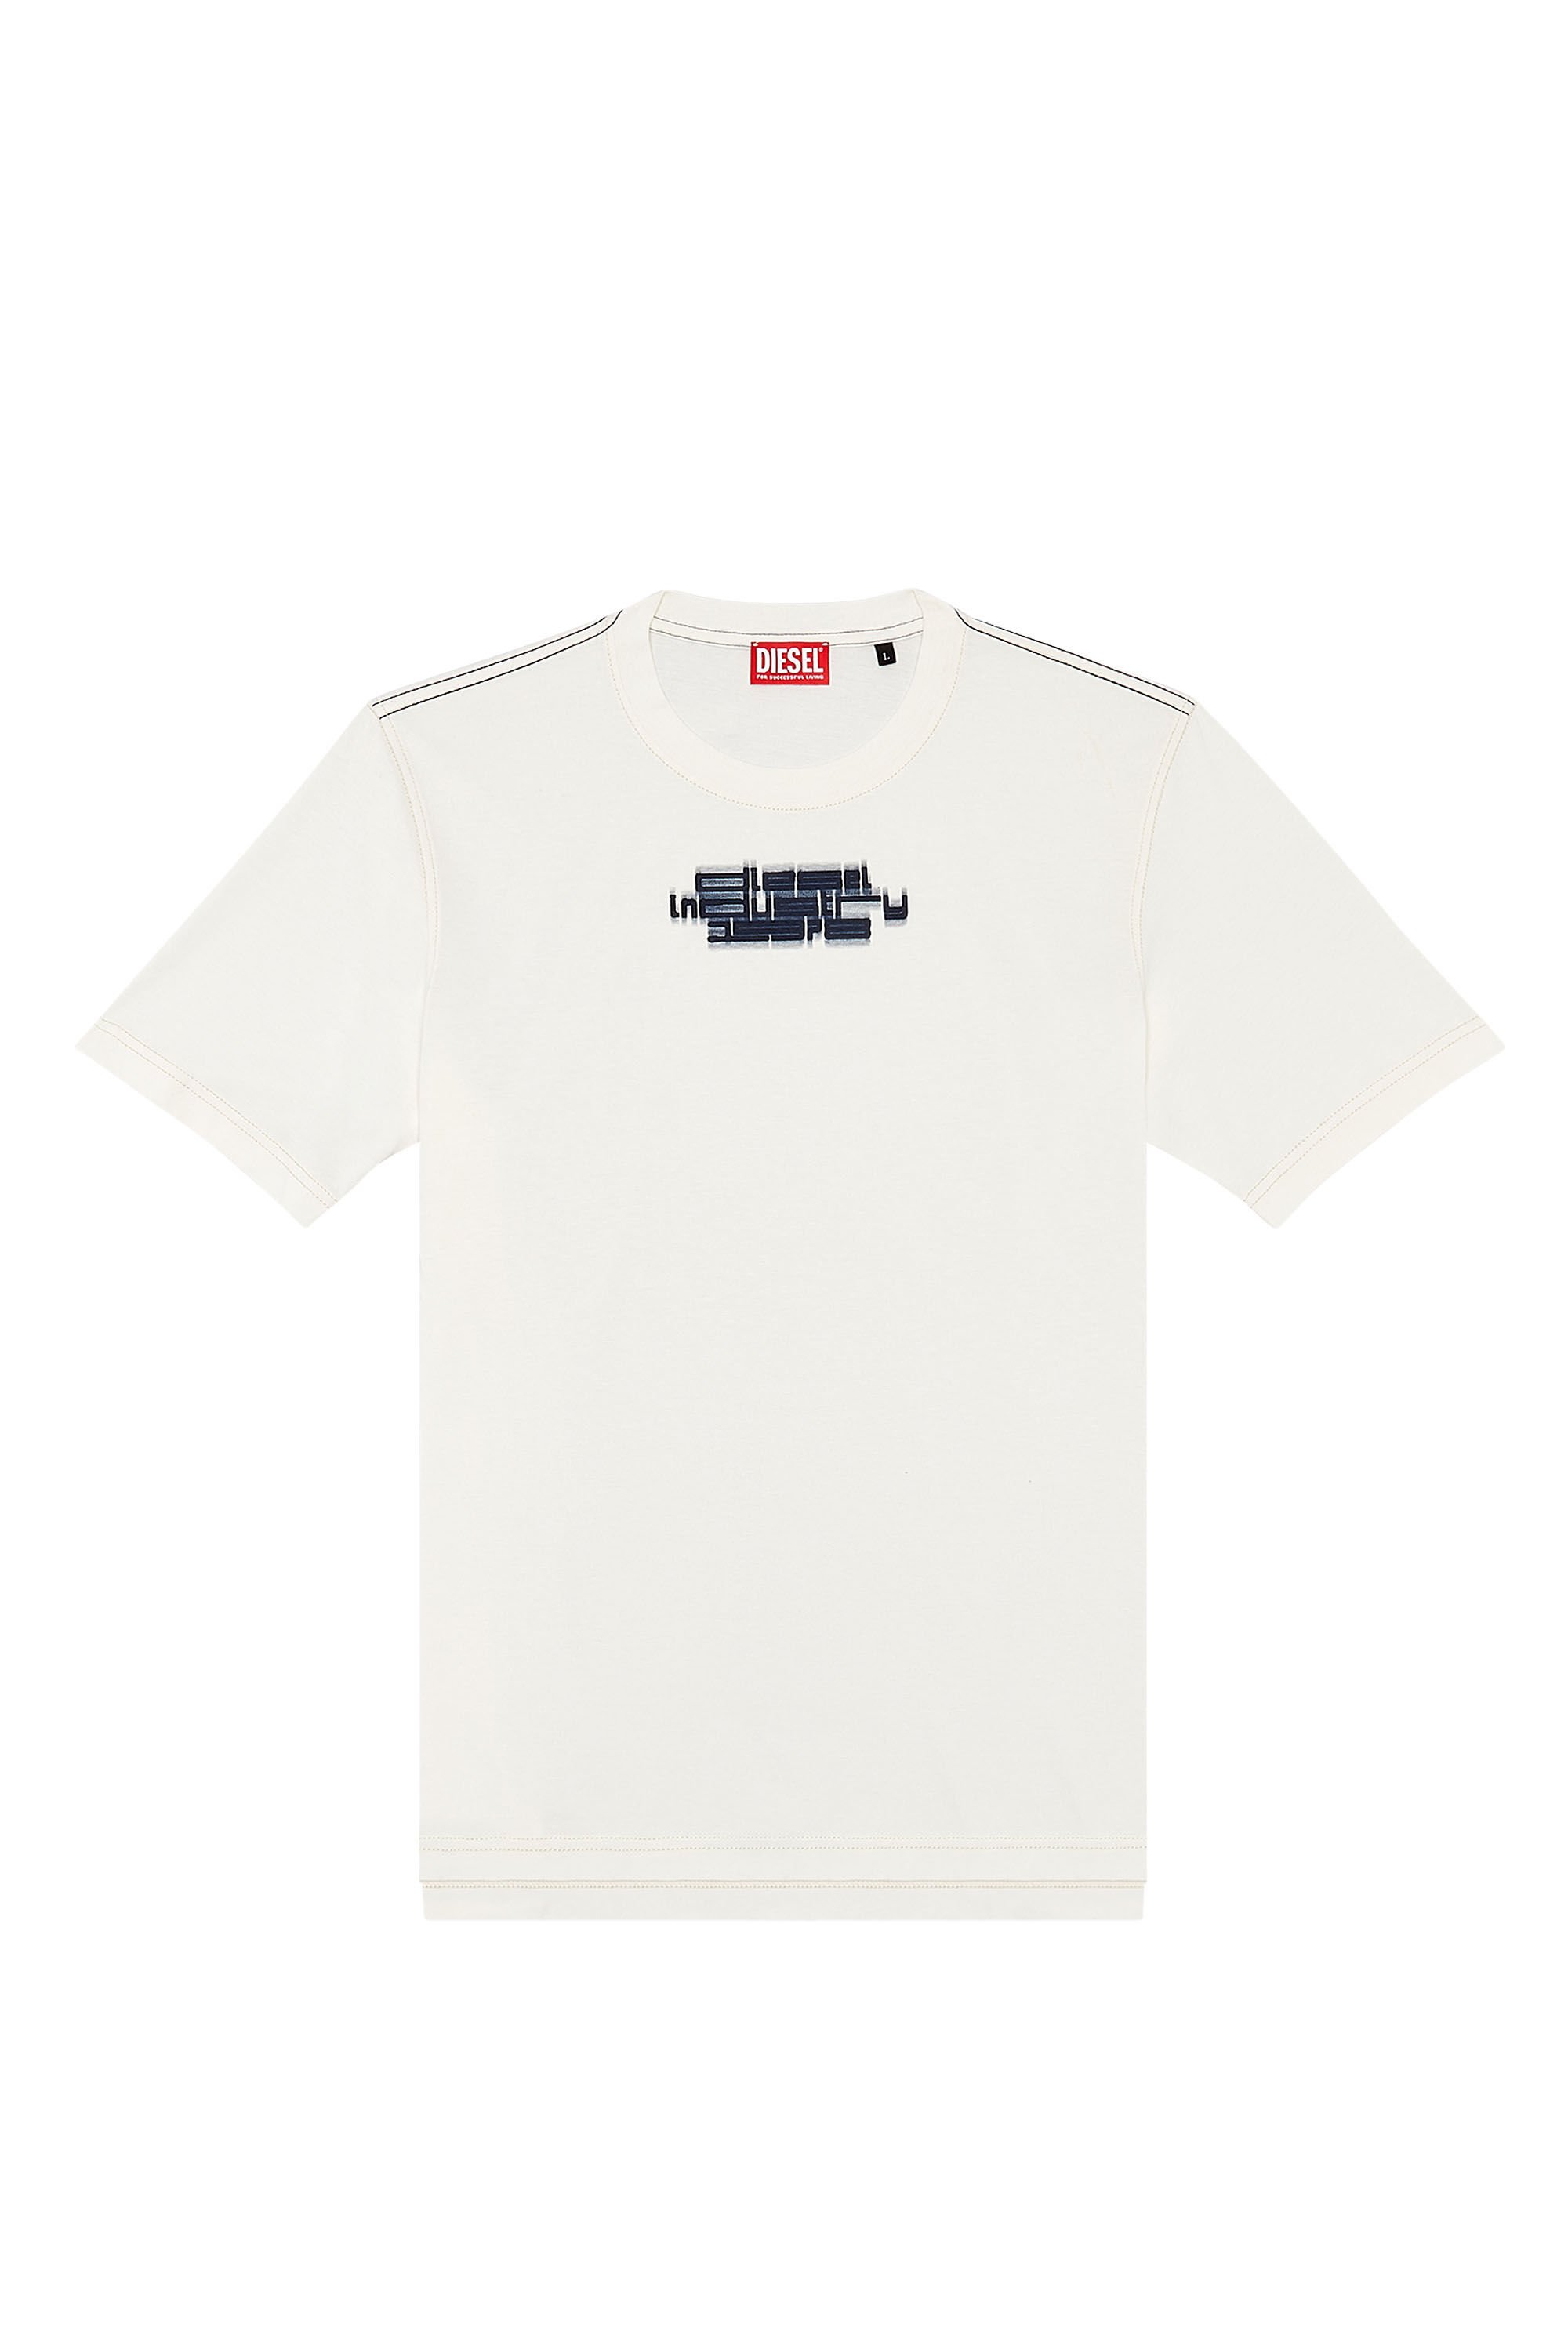 Diesel - T-JUST-SLITS-N6, Man T-shirt with blurry Diesel Industry print in White - Image 2